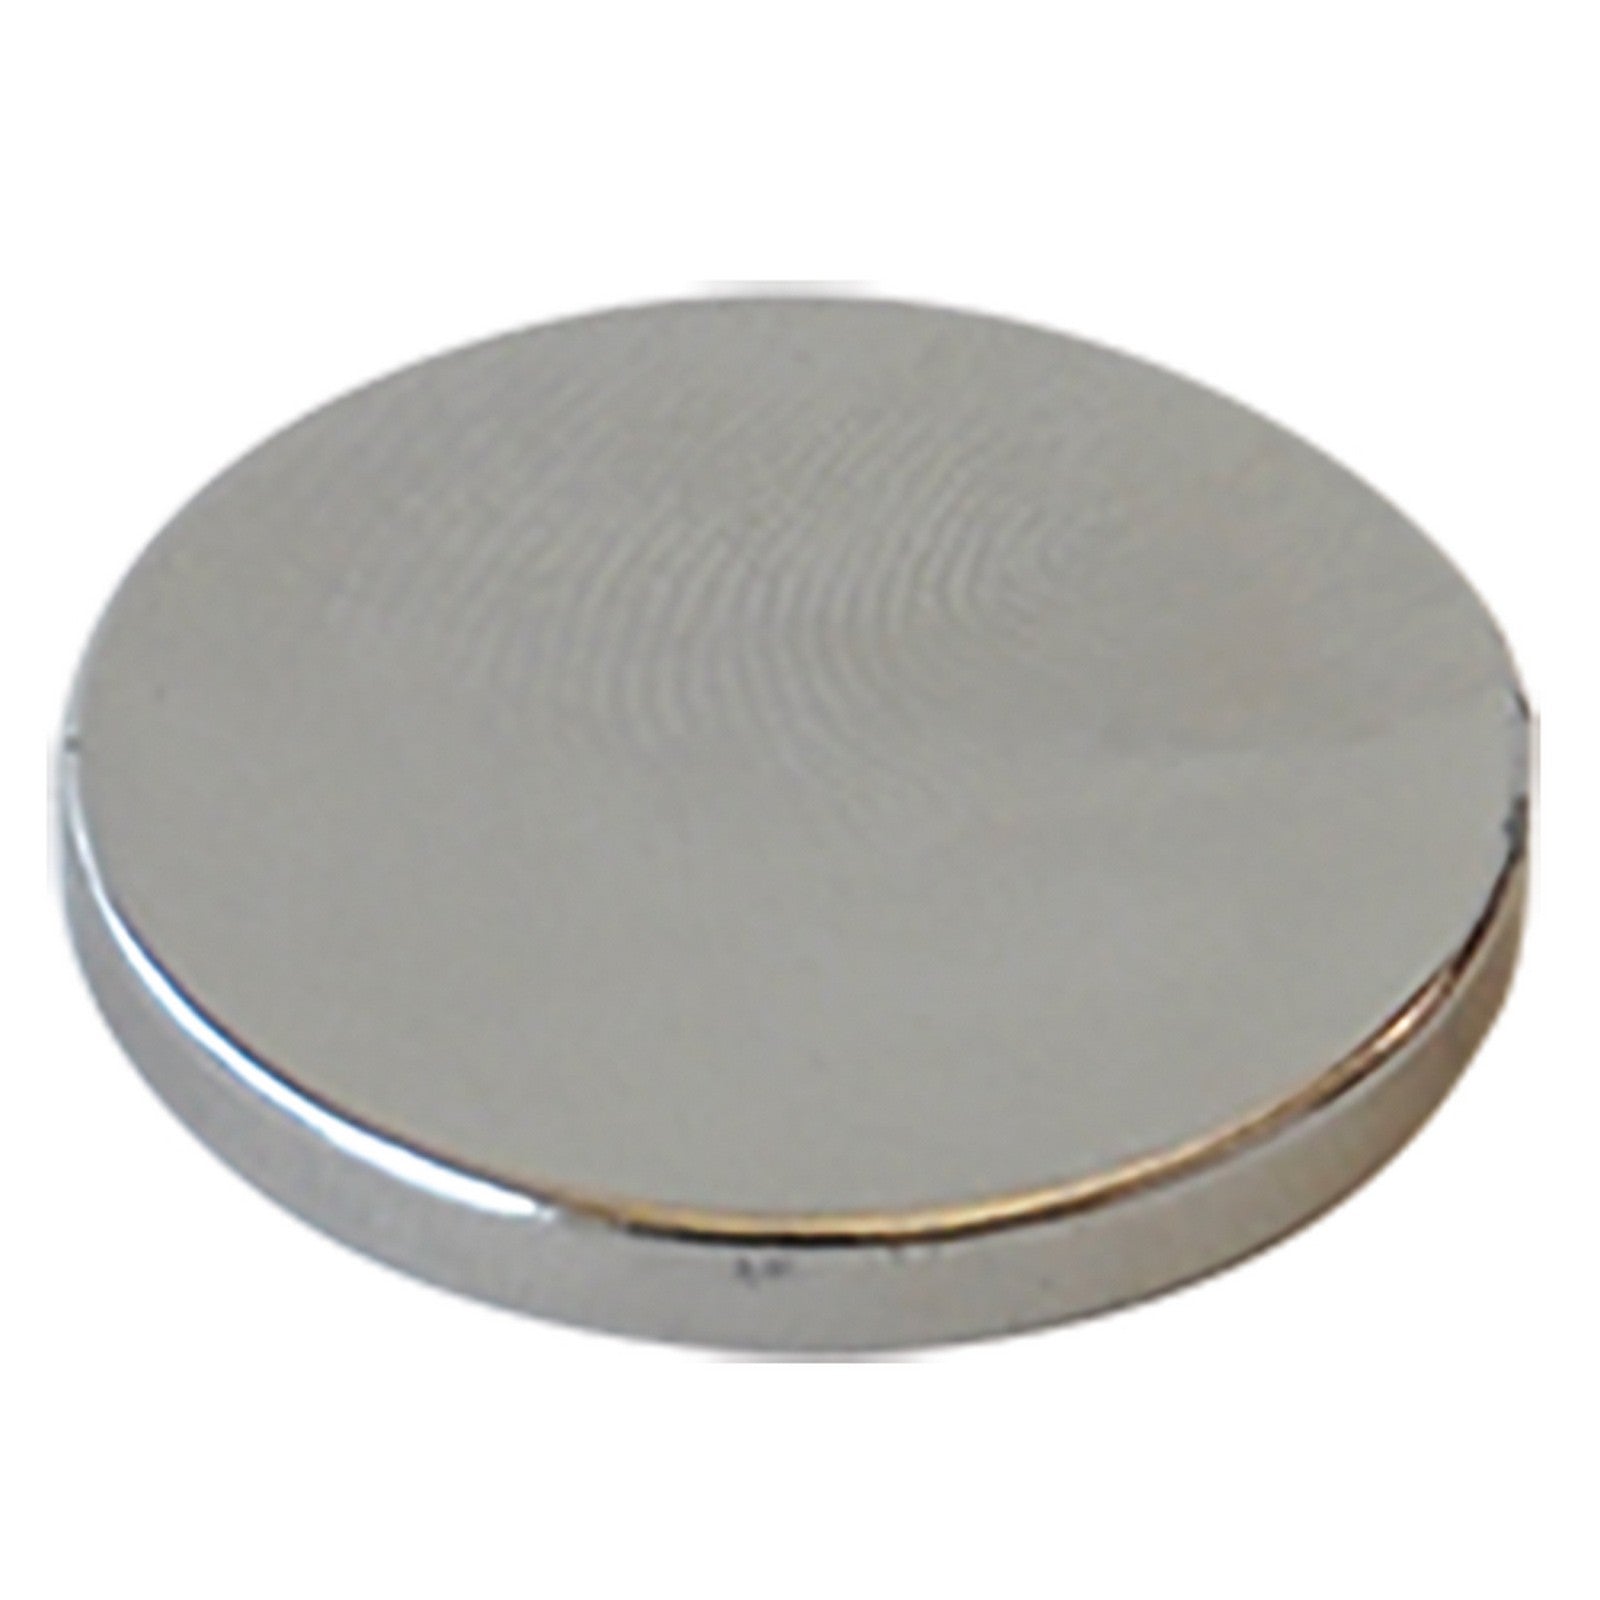 1blister bottone magnetico Ã¸mm 15 forza 6 kg - pz 6 cod:ferx.30820nlm